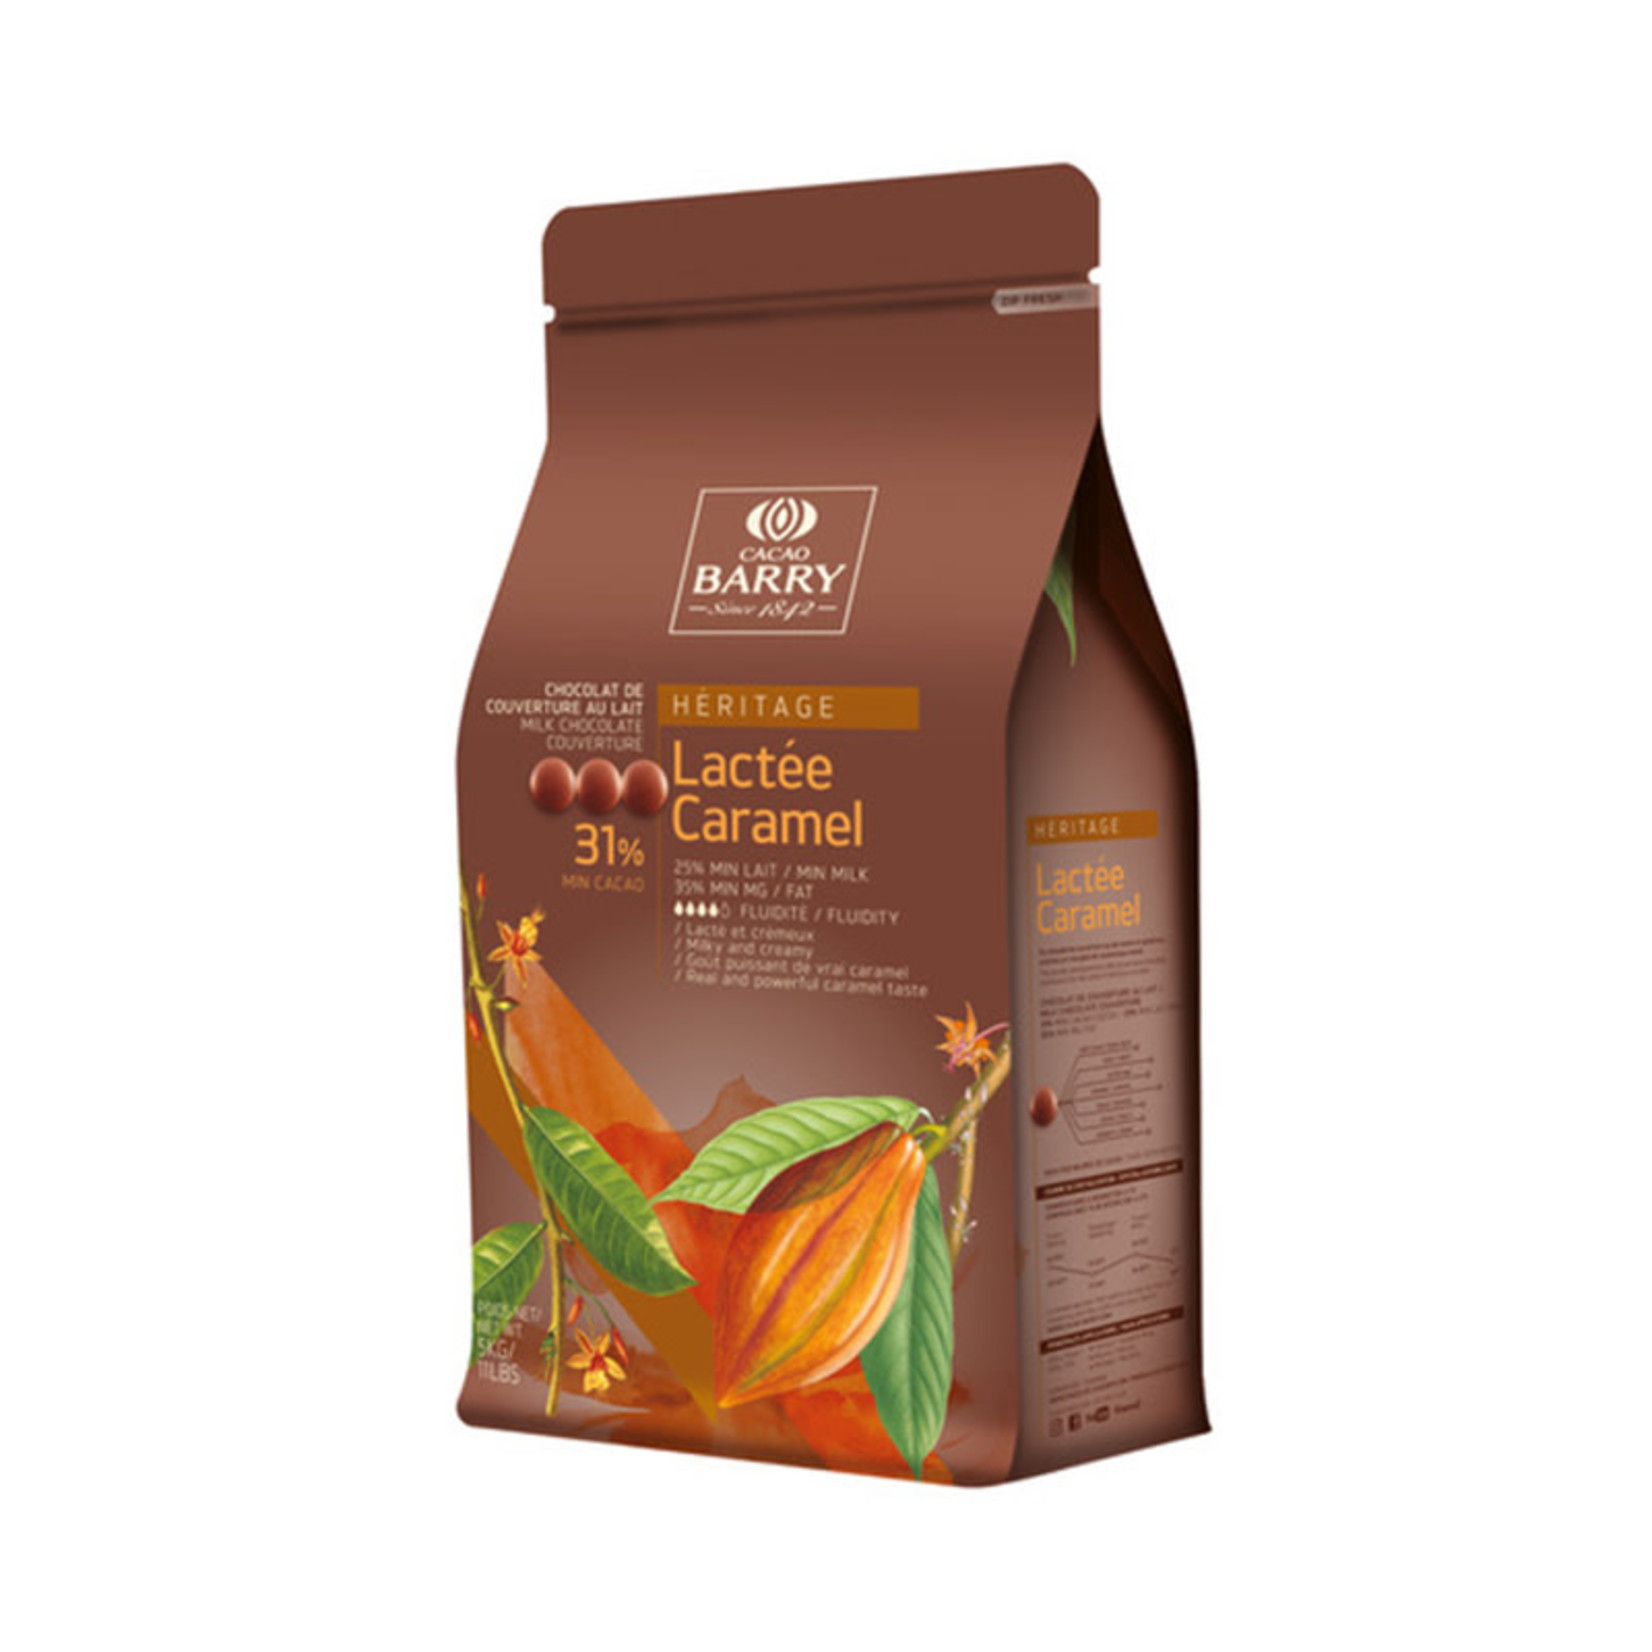 Cacao Barry Cacao Barry - Lactee Caramel Milk Chocolate 31% - 11 lb